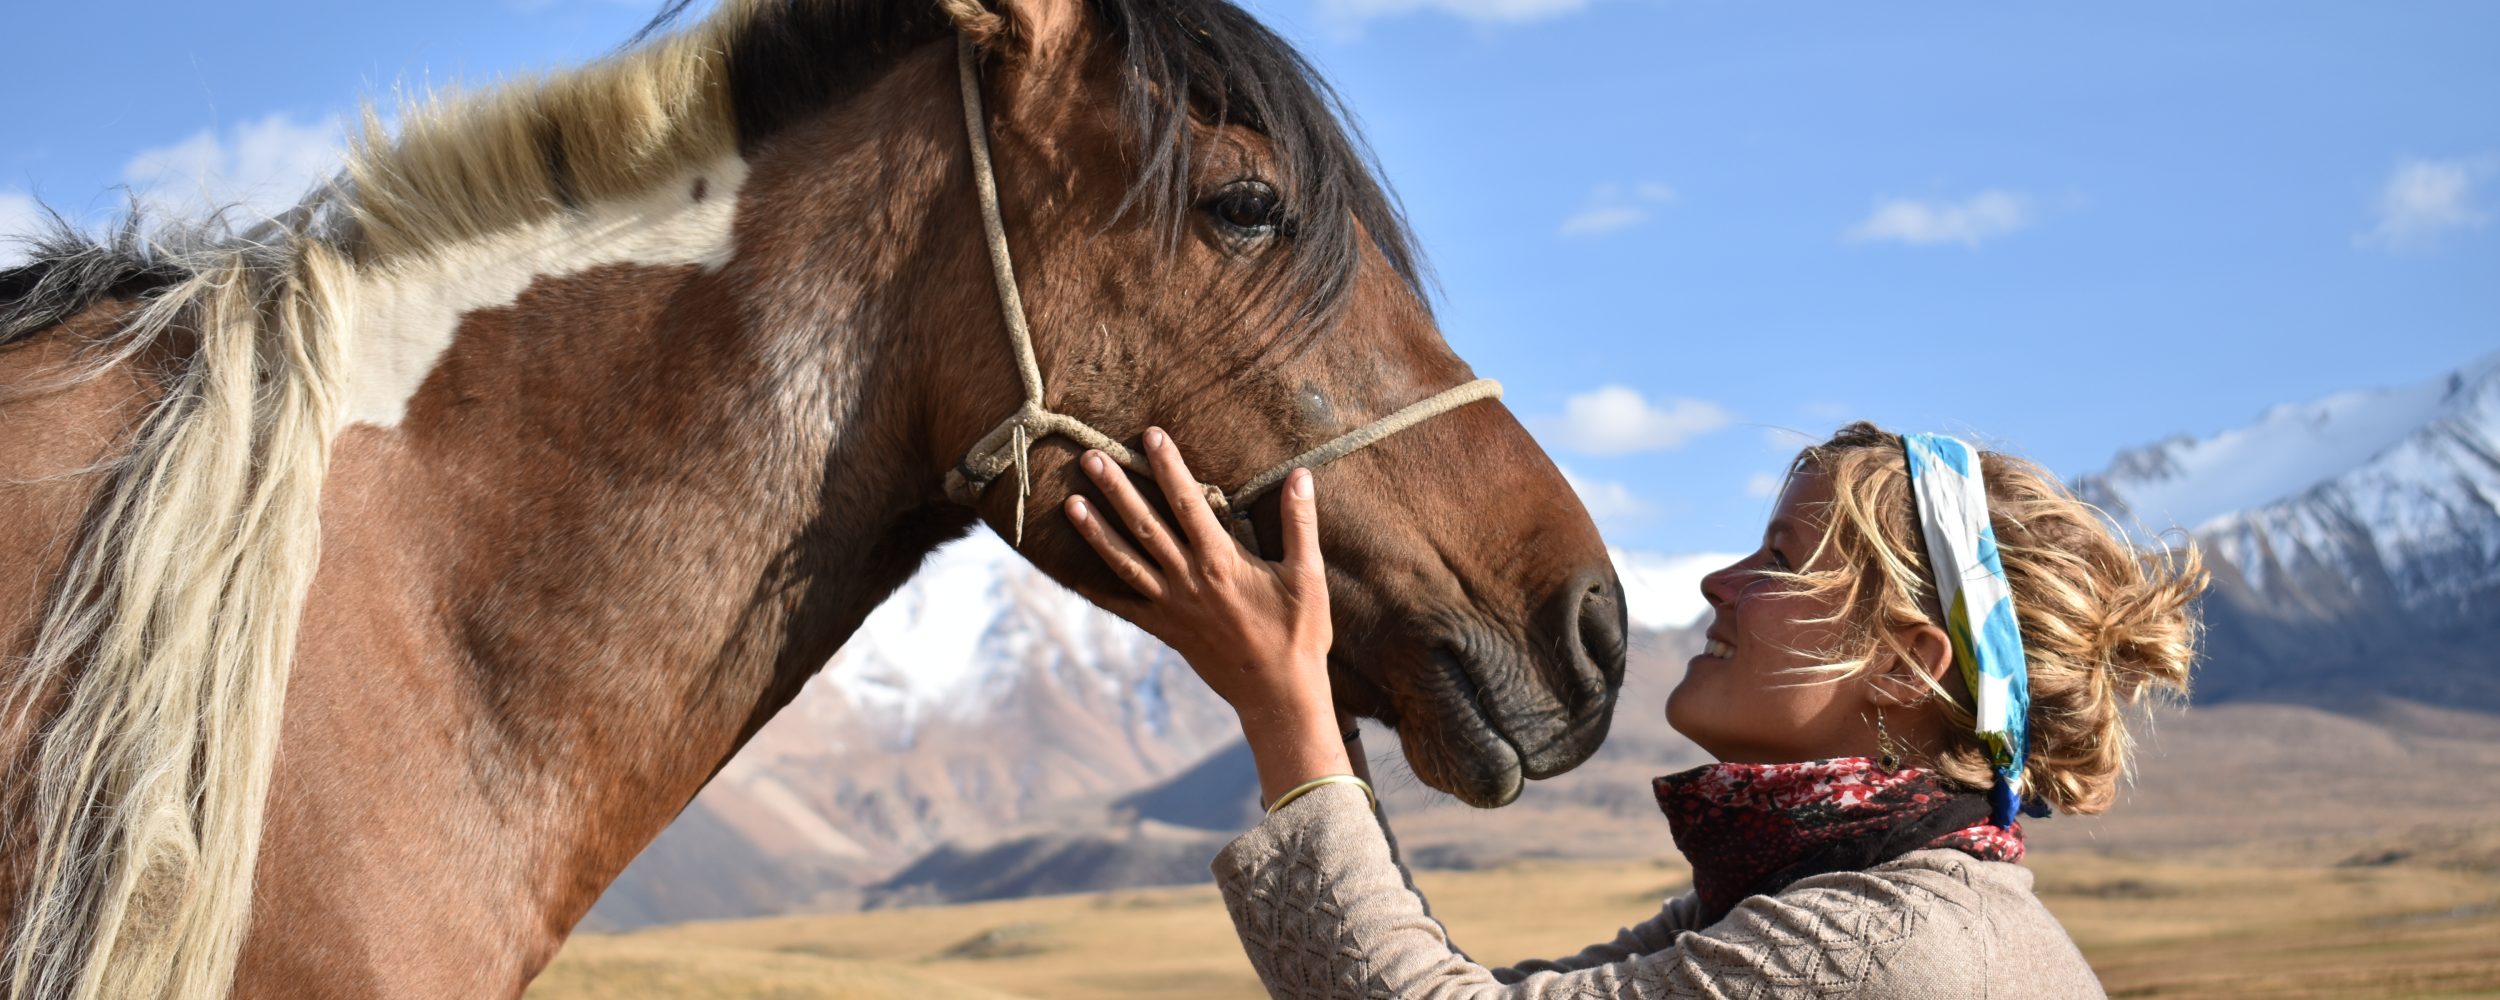 Tamar Valkenier - Fulltime avonturier en haar paardi